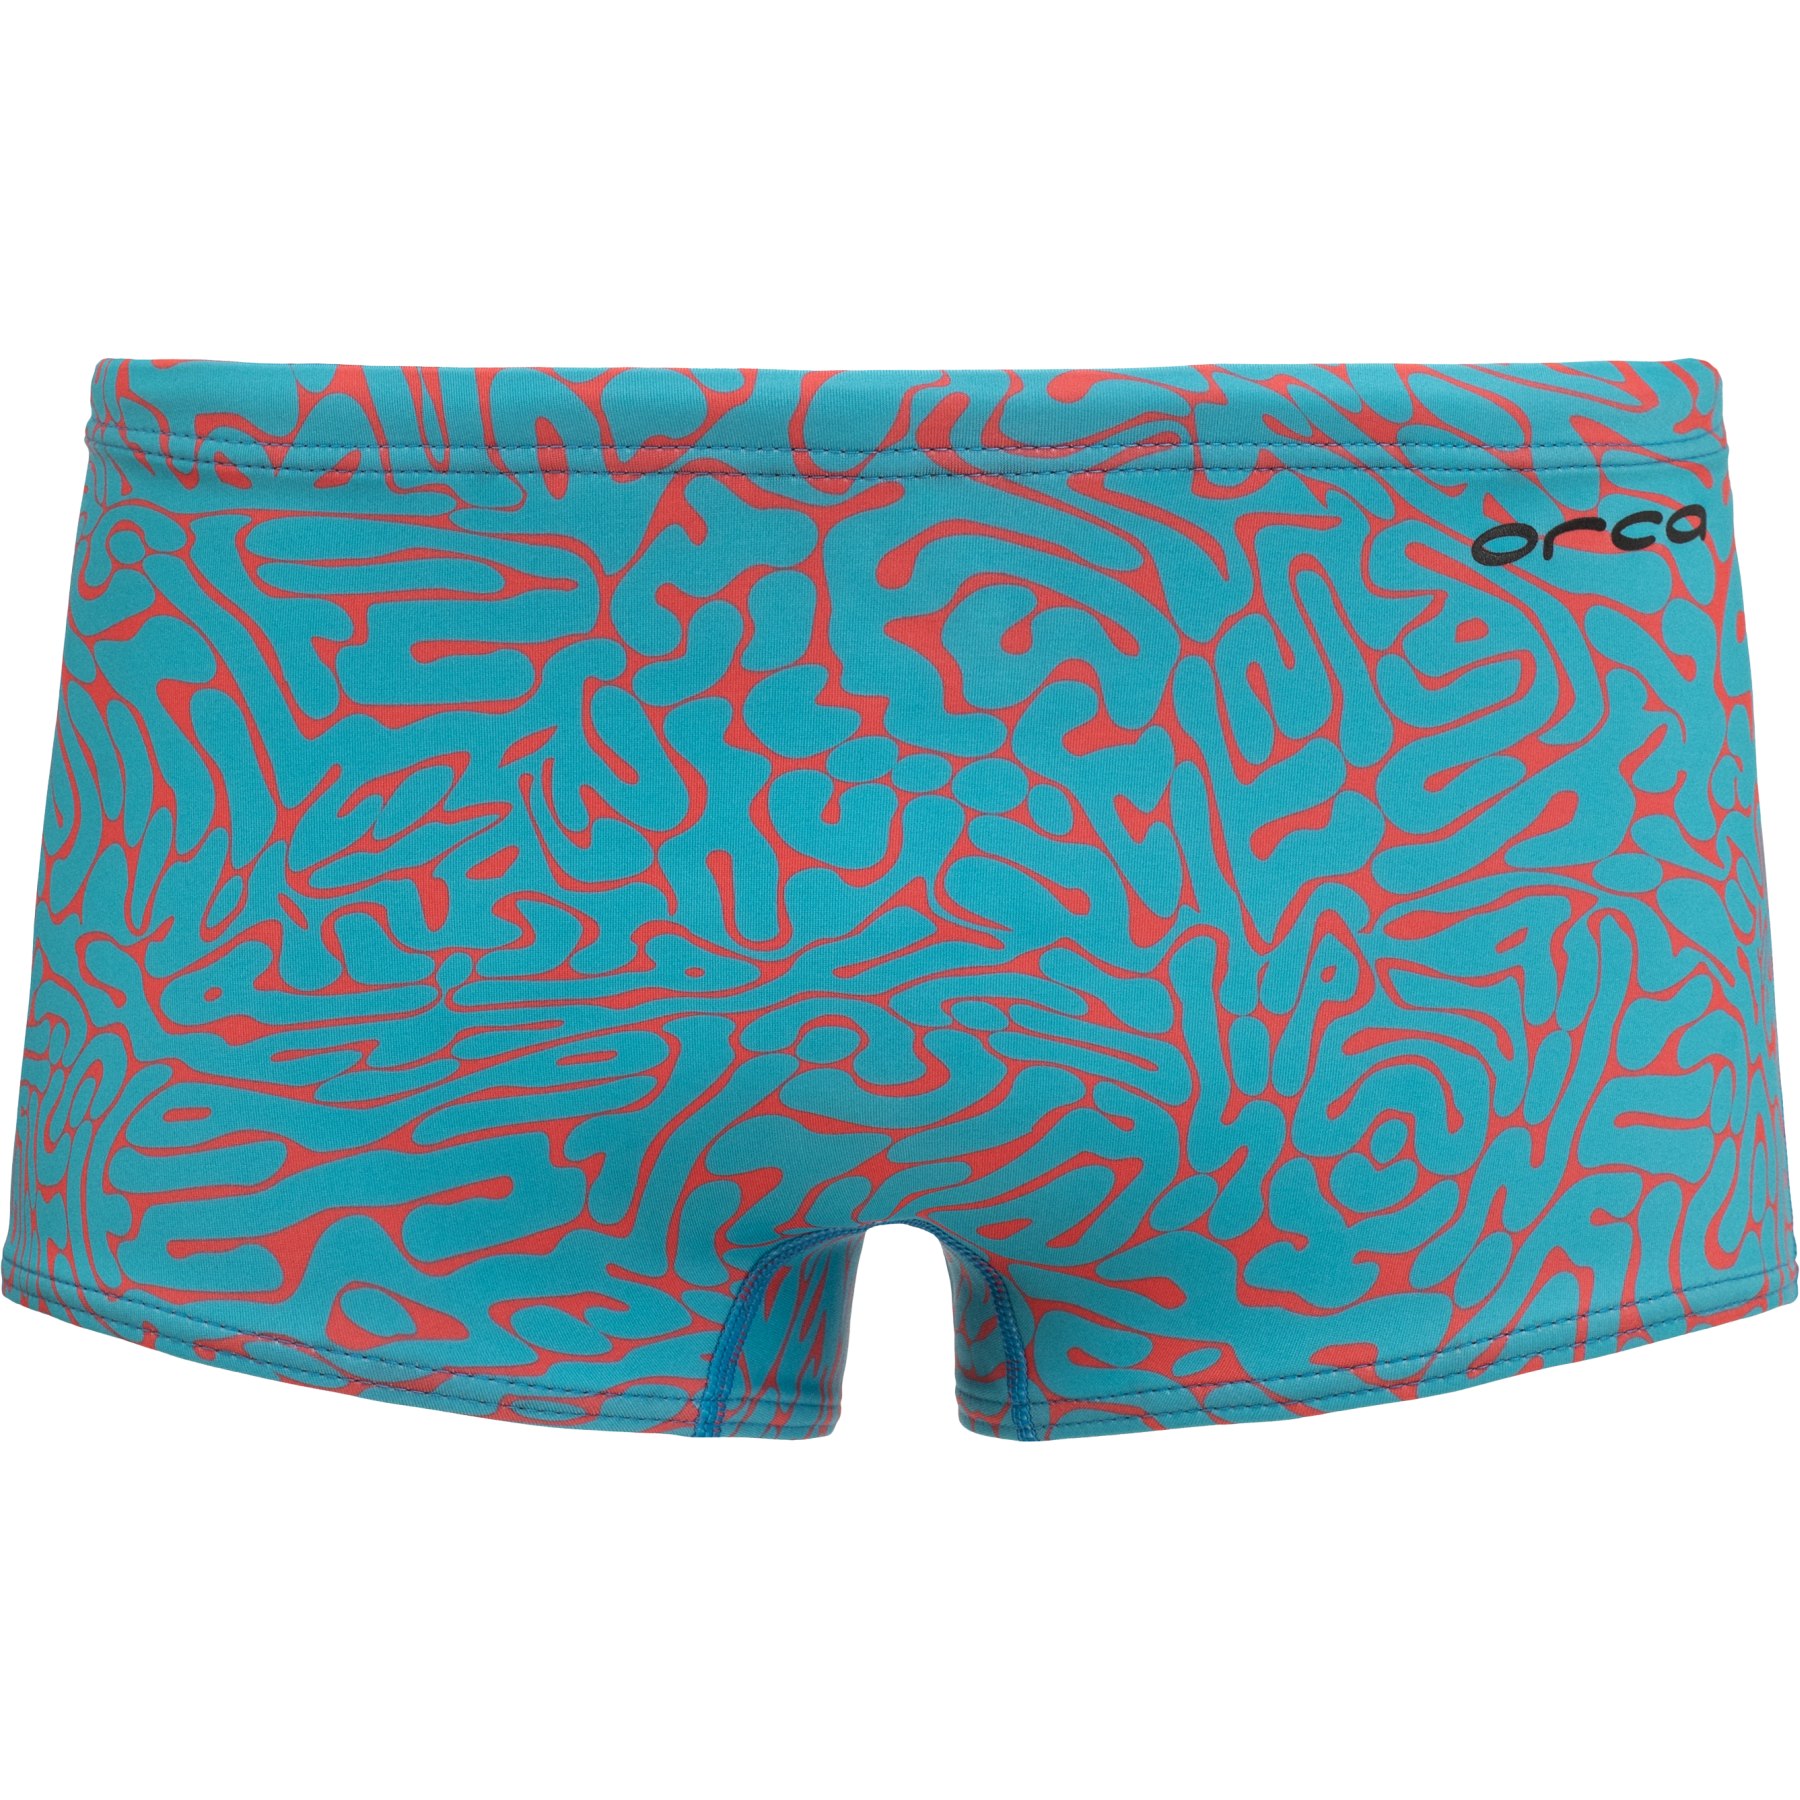 Productfoto van Orca Core Square Leg Swim Shorts - red diploria MS18